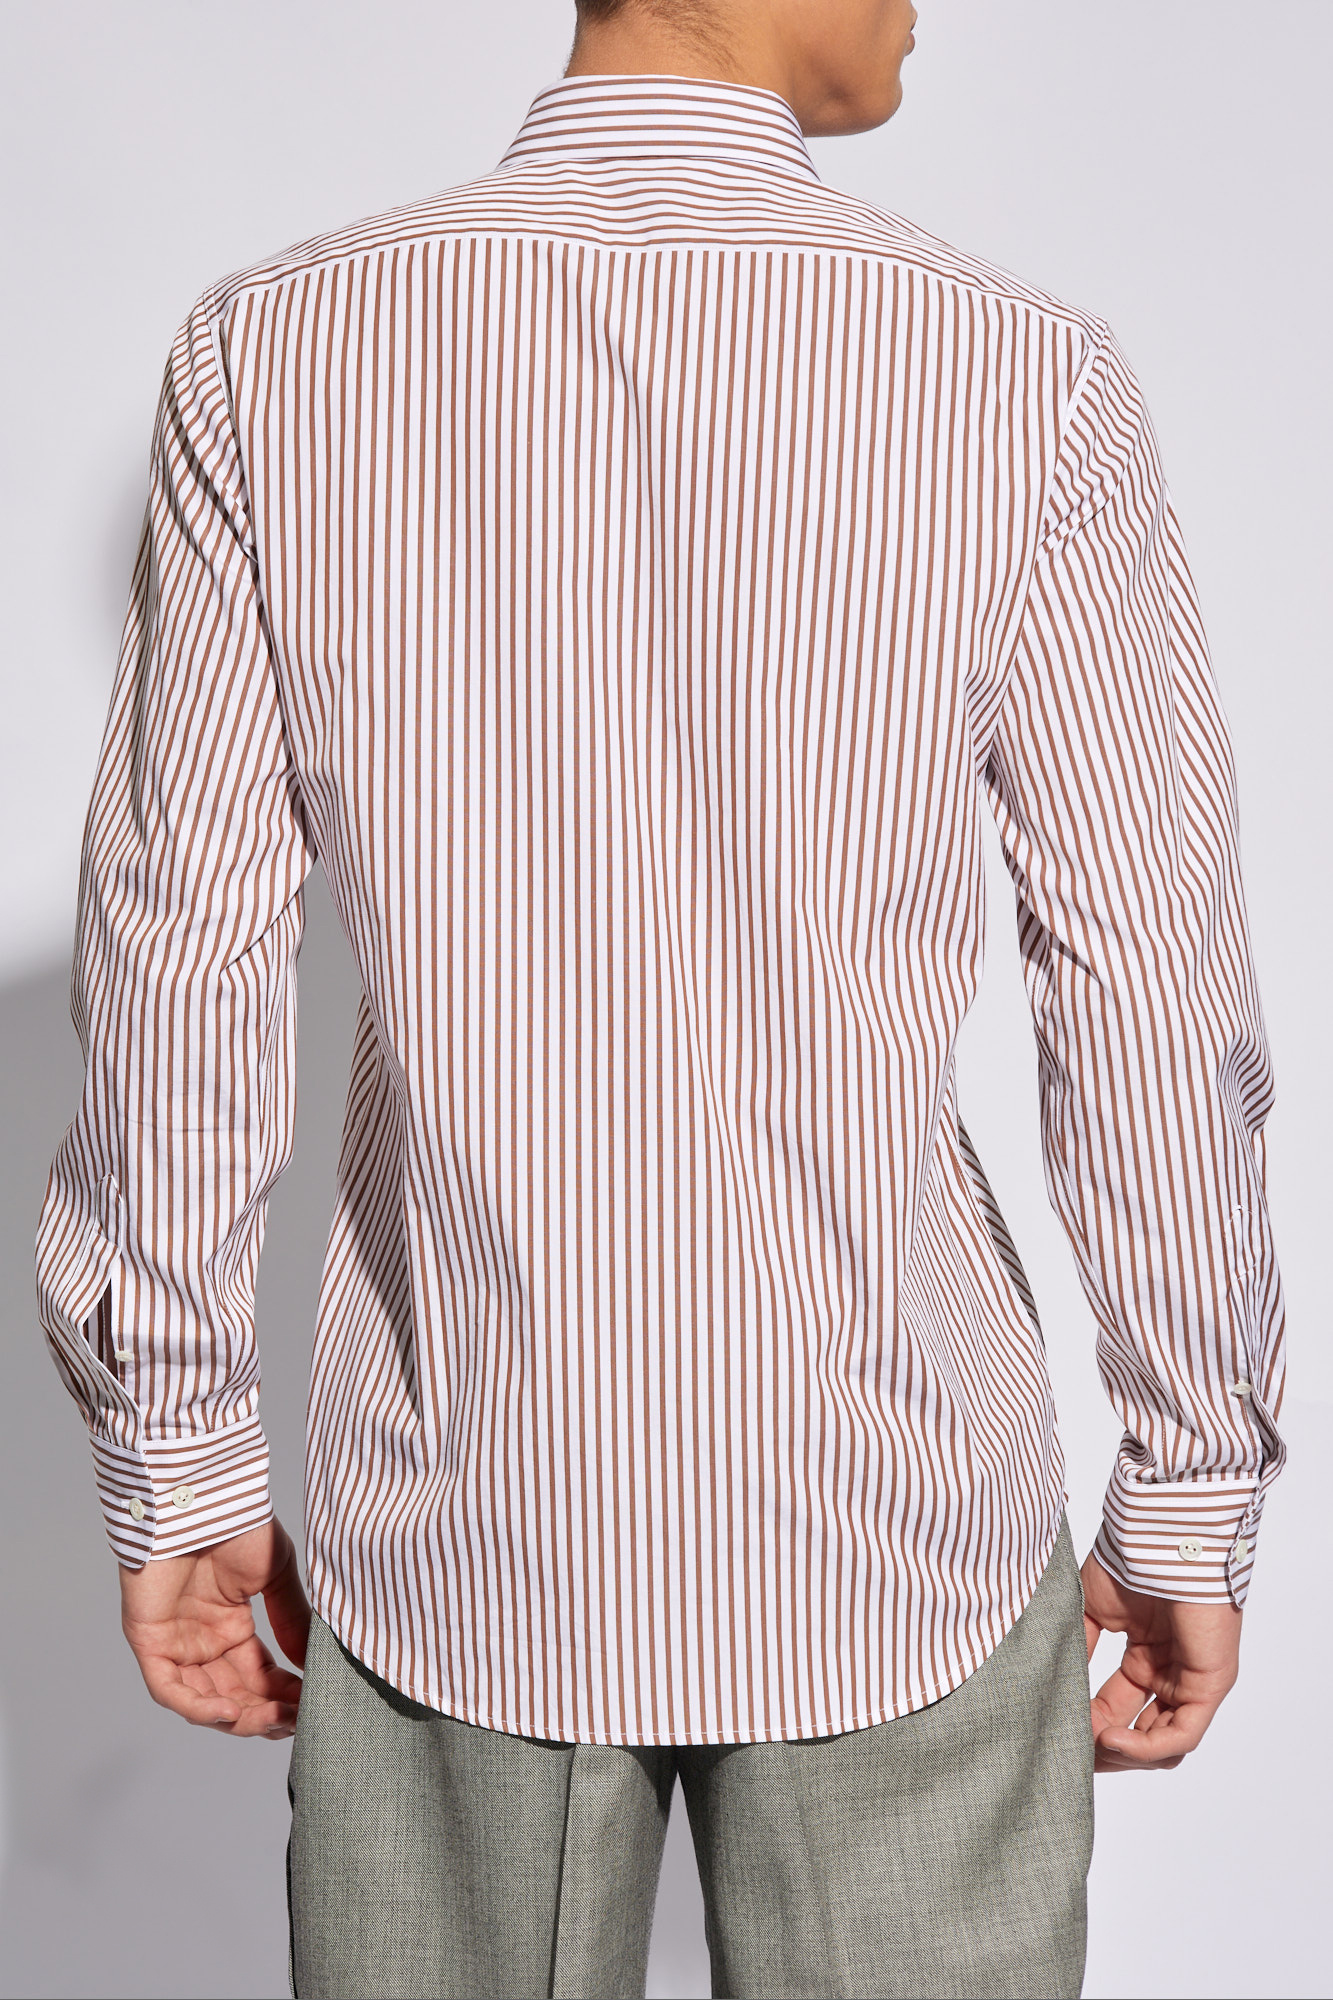 Dries Van Noten Striped printed shirt